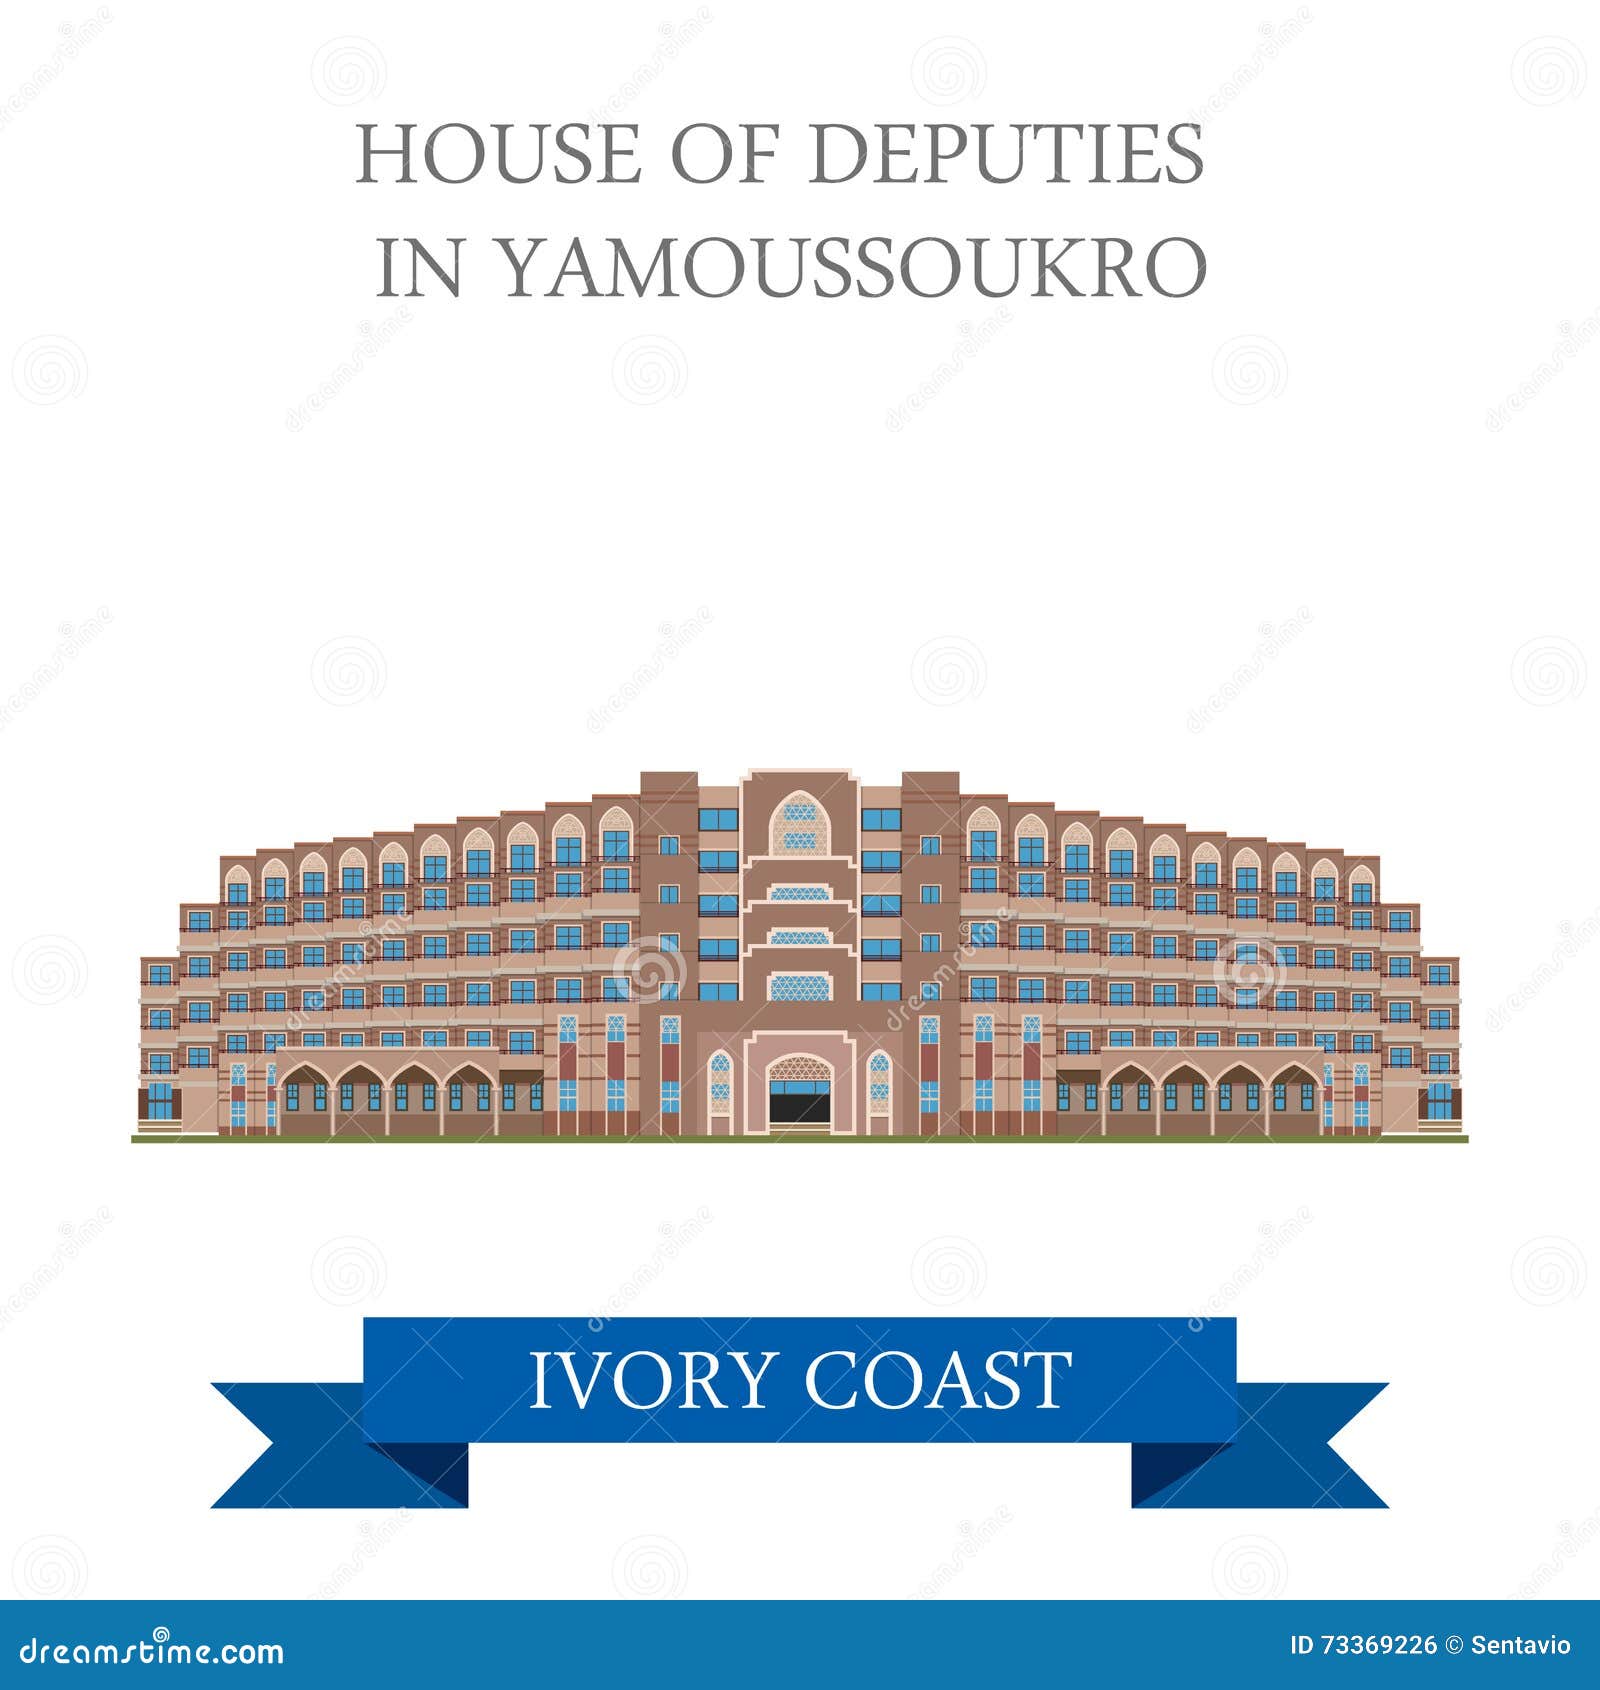 house of deputies in yamoussoukro ivory coast flat